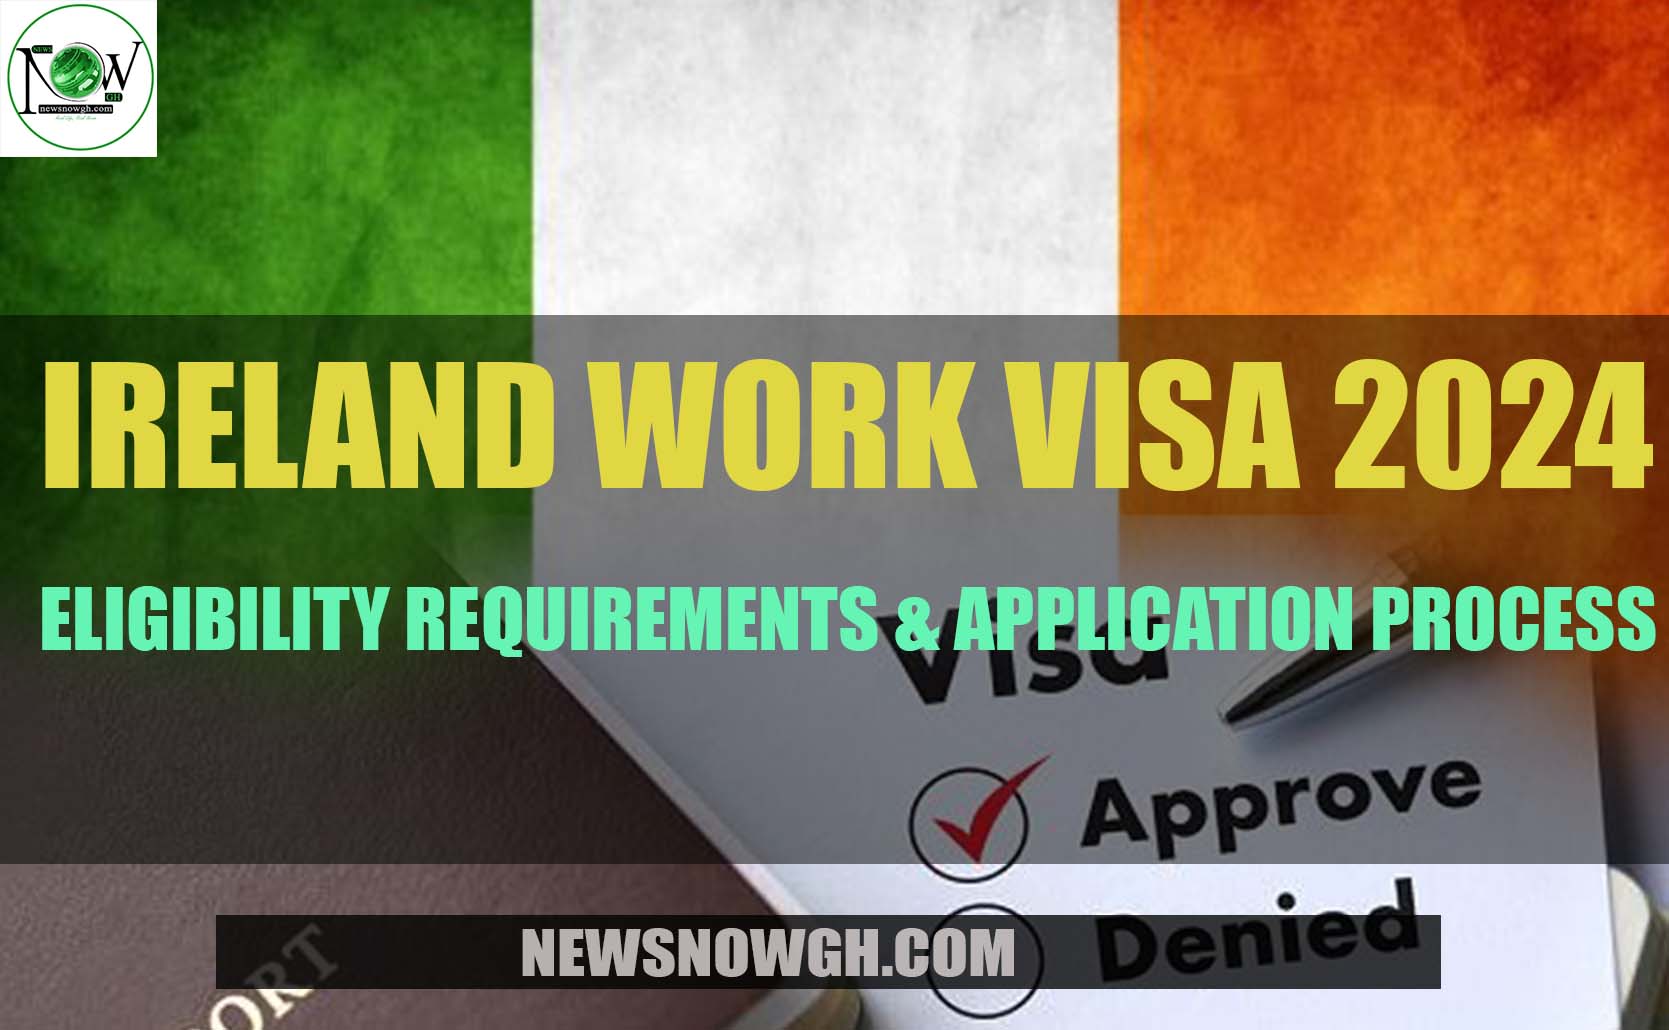 Ireland Work Visa 2024 Requirements & Application Process